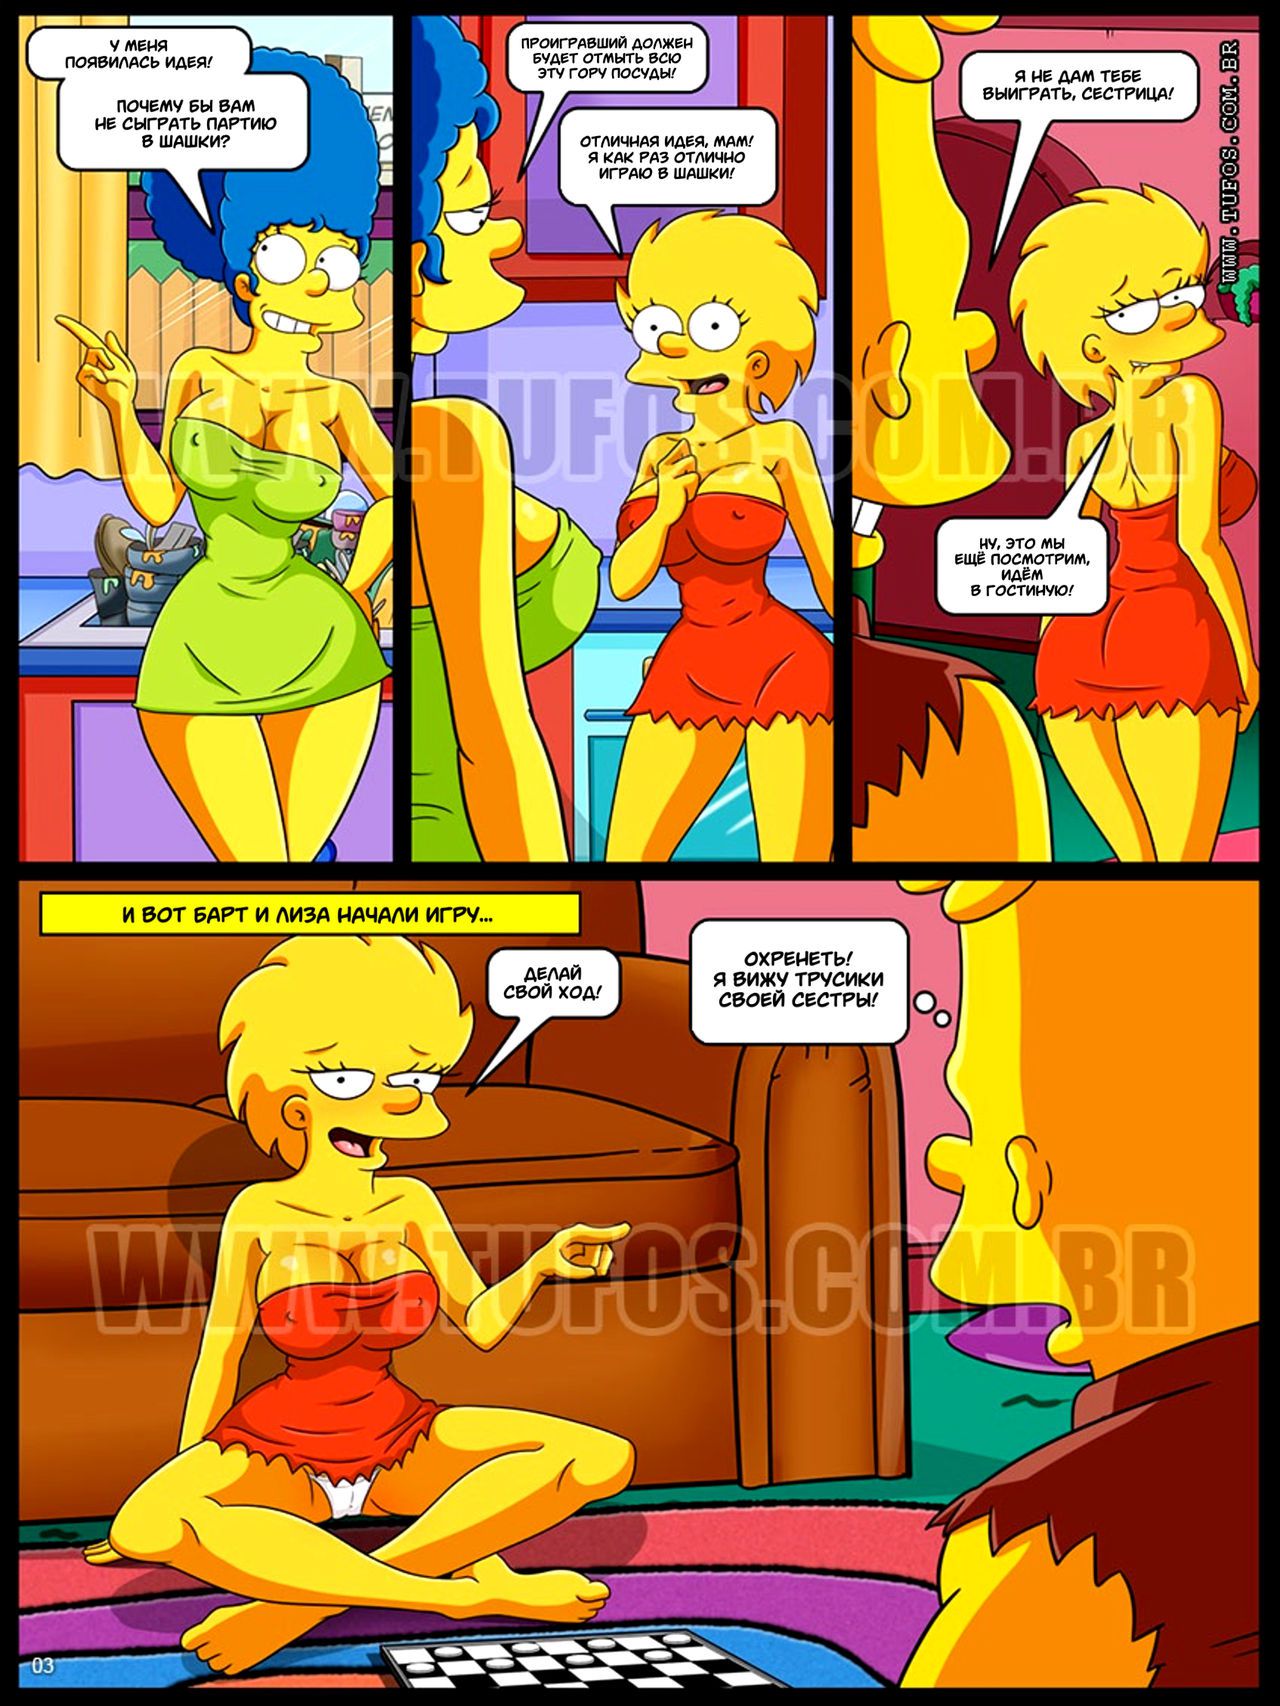 [Tufos (Croc)] The Simpsons #3: The Checkers Game | Симпсоны #3: Игра в шашки [Russian] {Shadow} Os Simptoons #3: Jogando damas 3